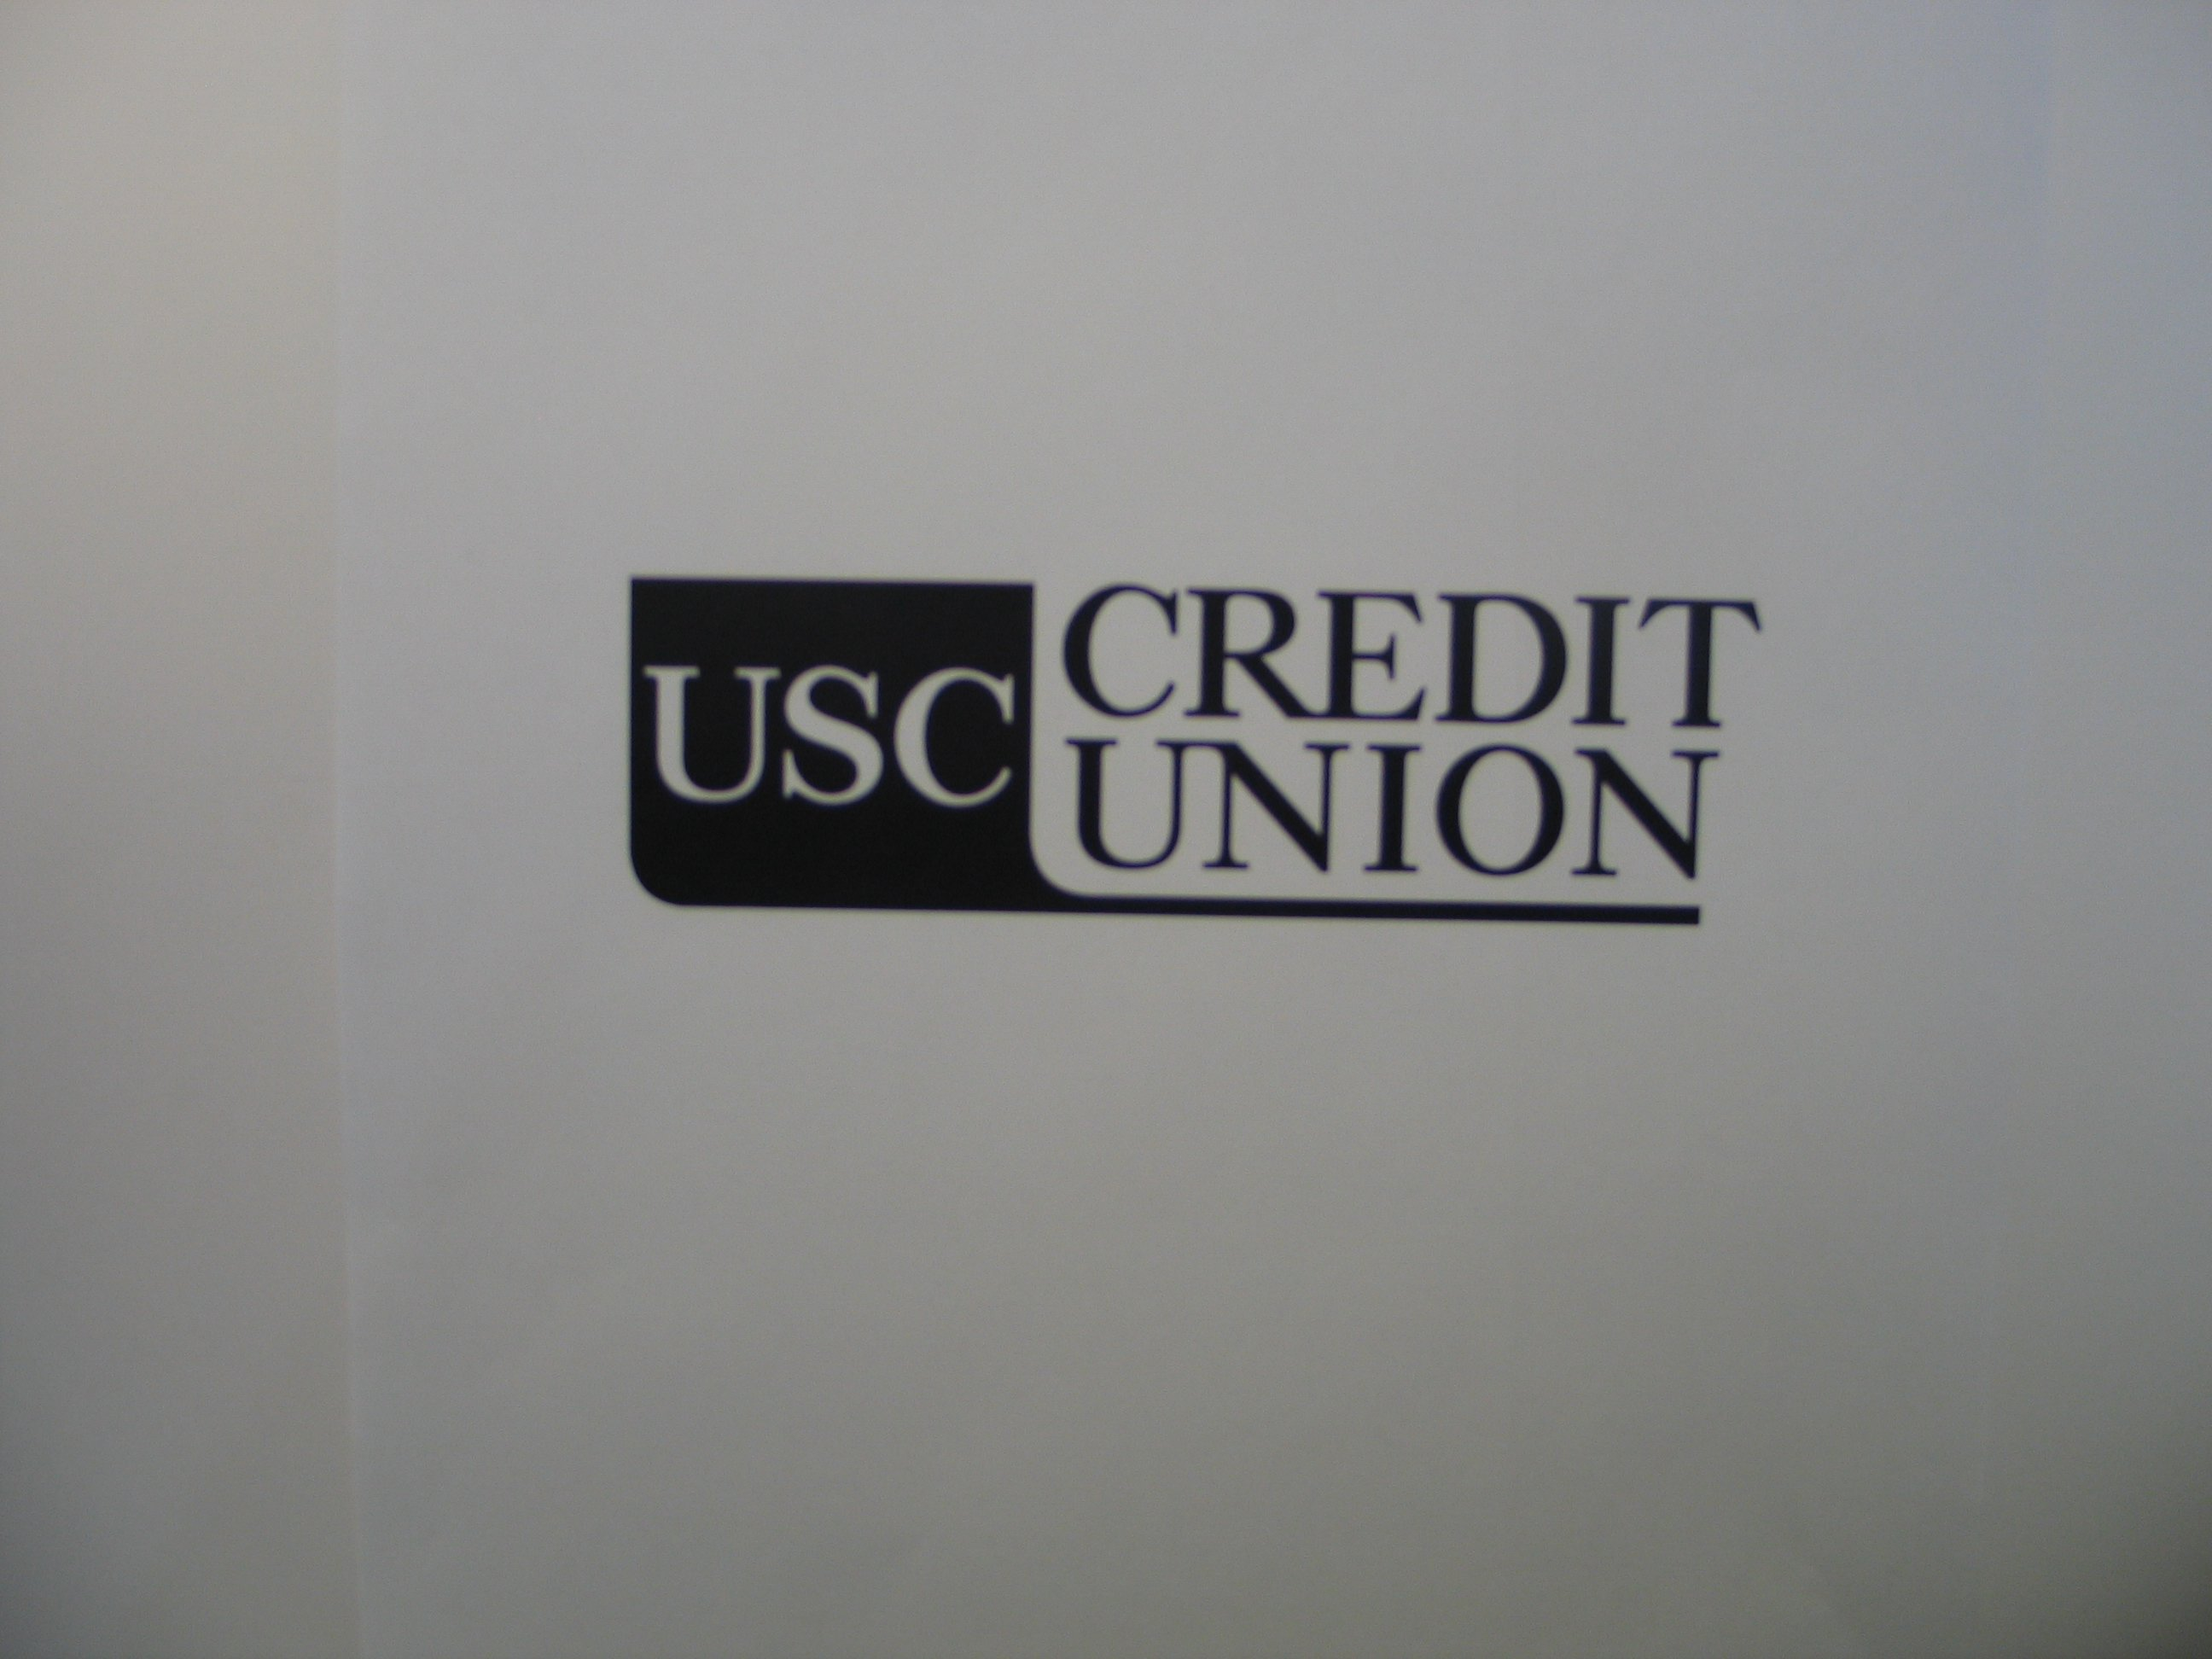  USC CREDIT UNION